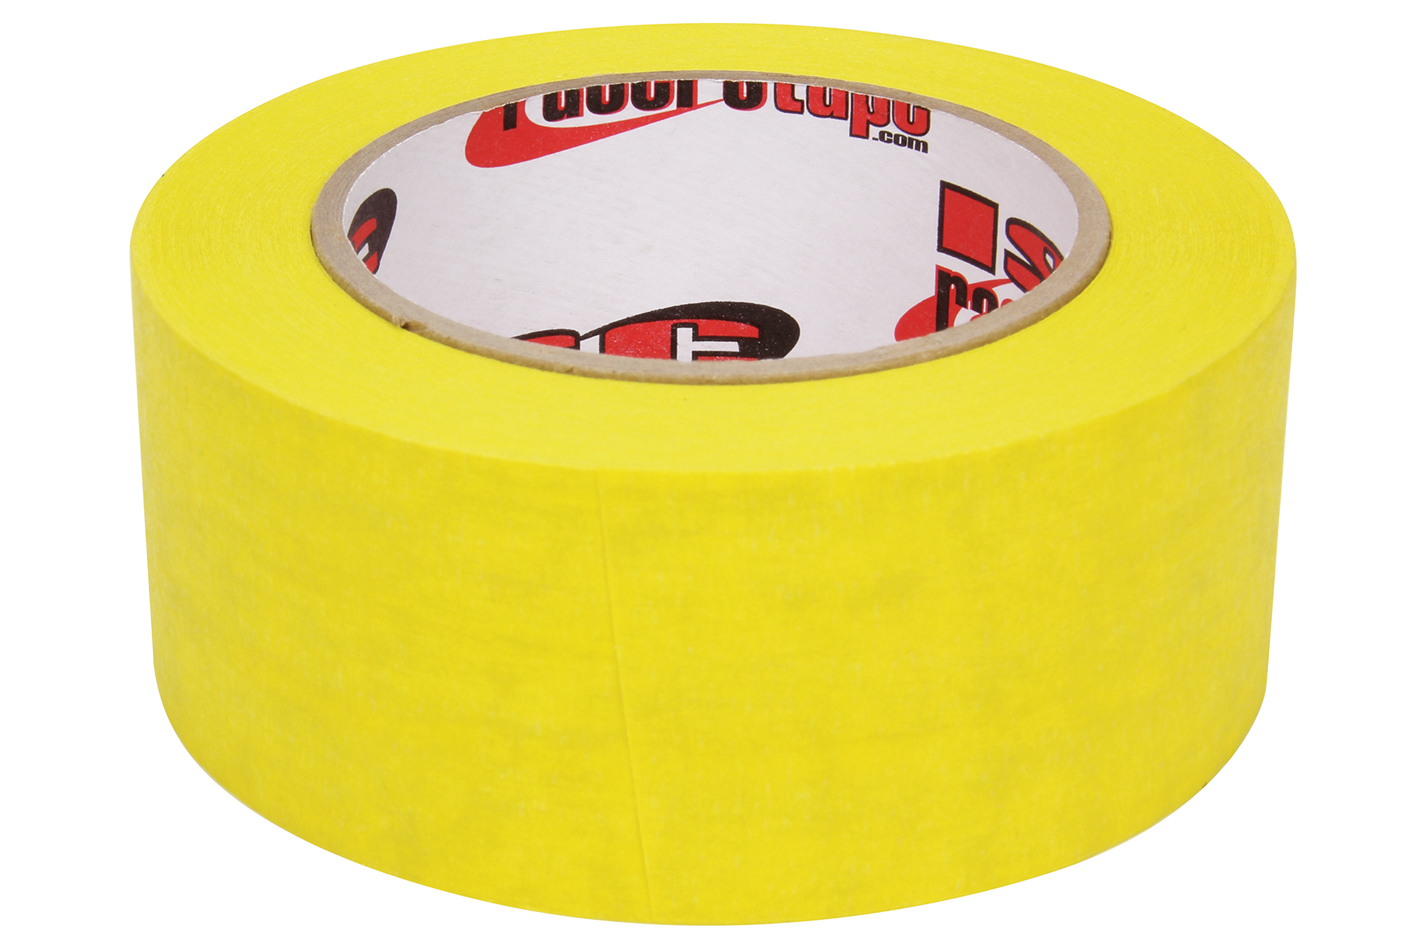 ALLSTAR, Masking Tape, 150 ft Long, 2 in Wide, Yellow, Each